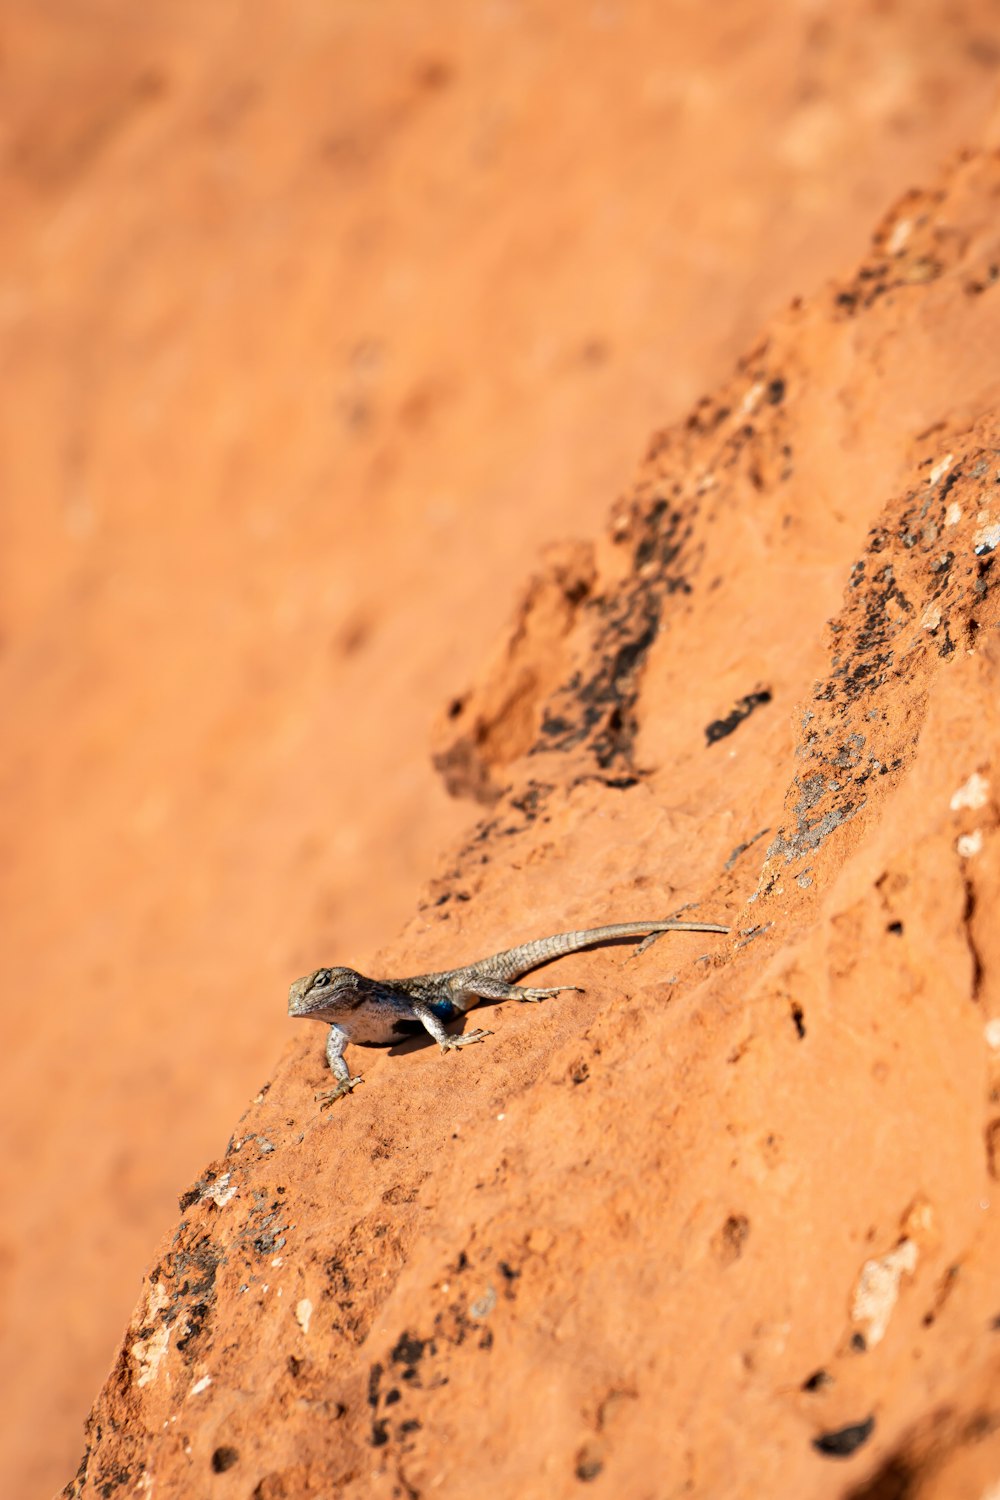 a lizard on a rock in the desert